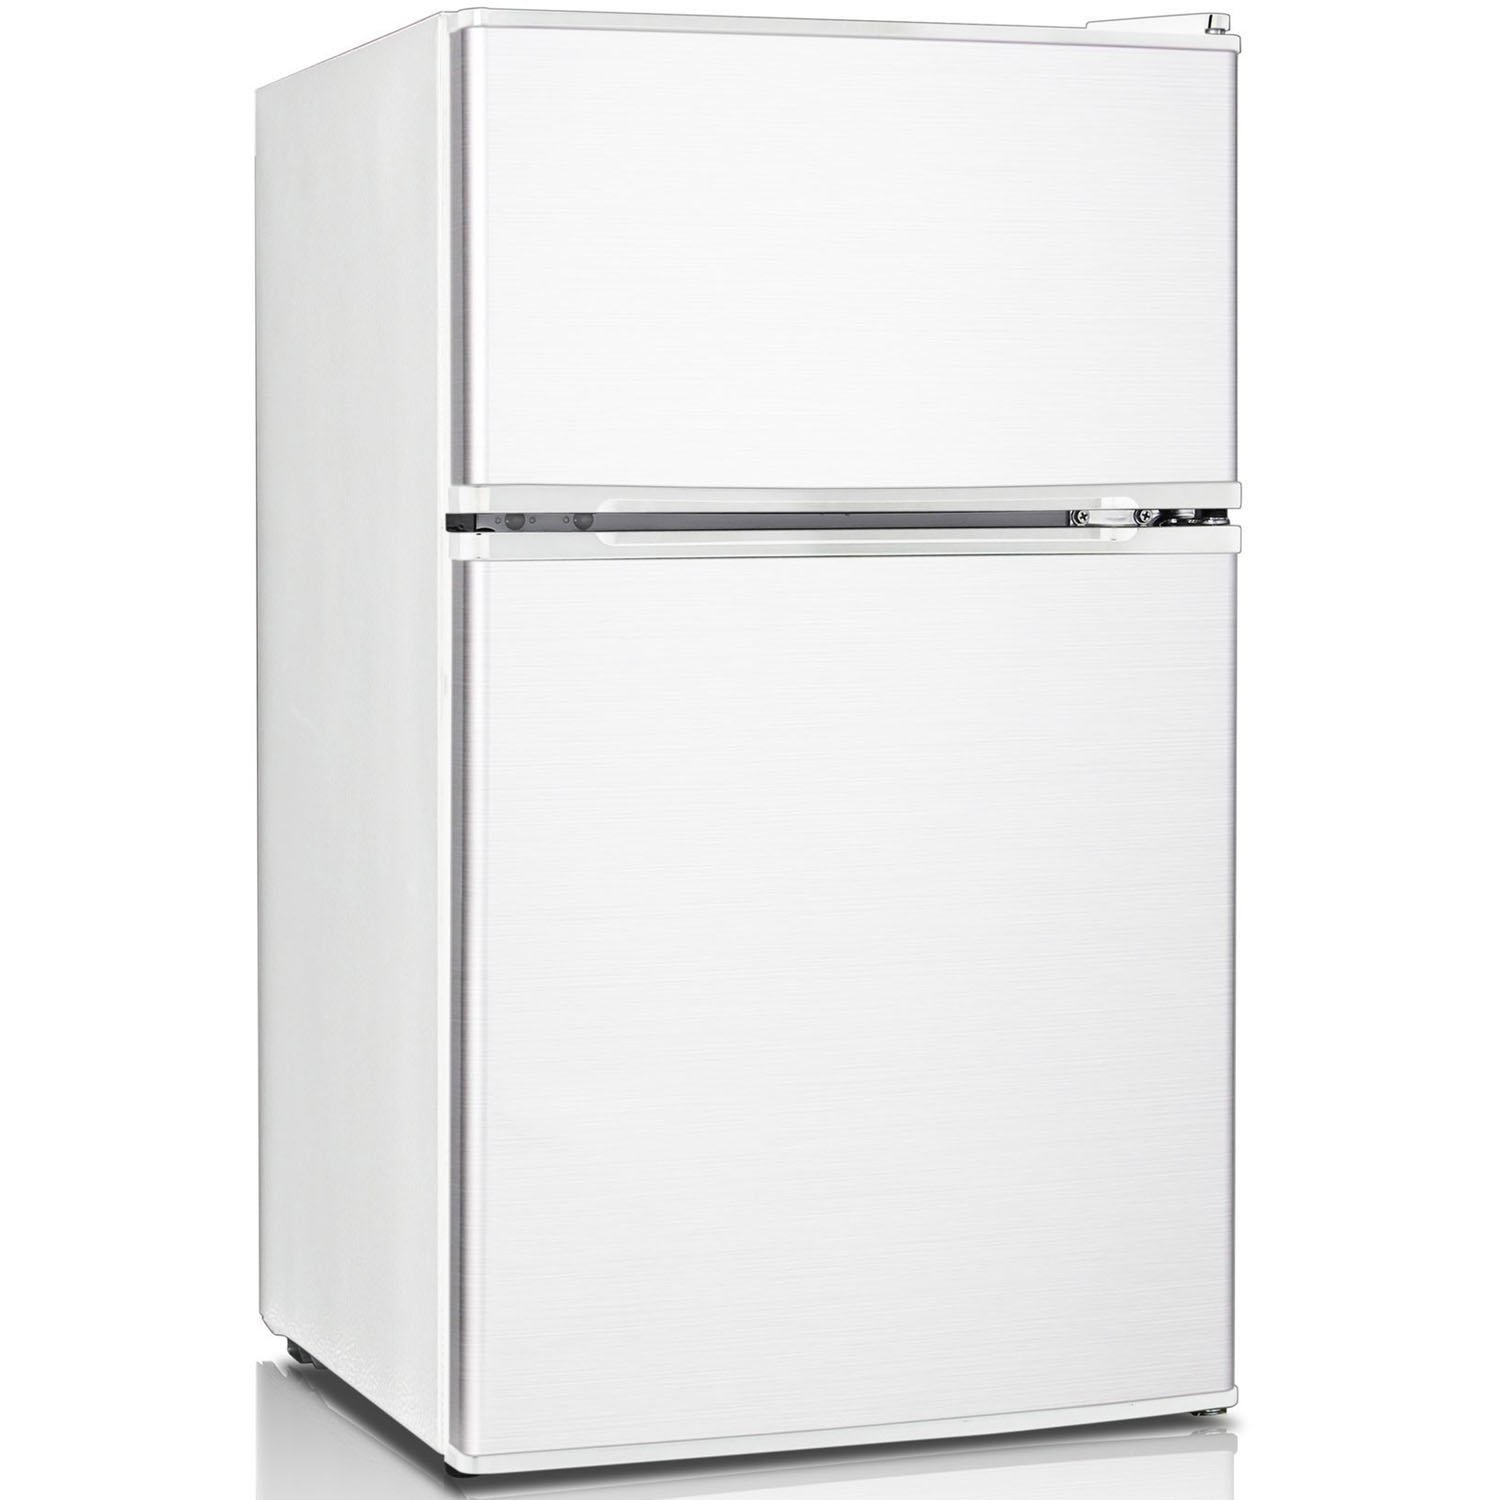 Keystone KSTRC312CW Compact 2-Door Refrigerator/Freezer, 3.1 Cubic Feet, White